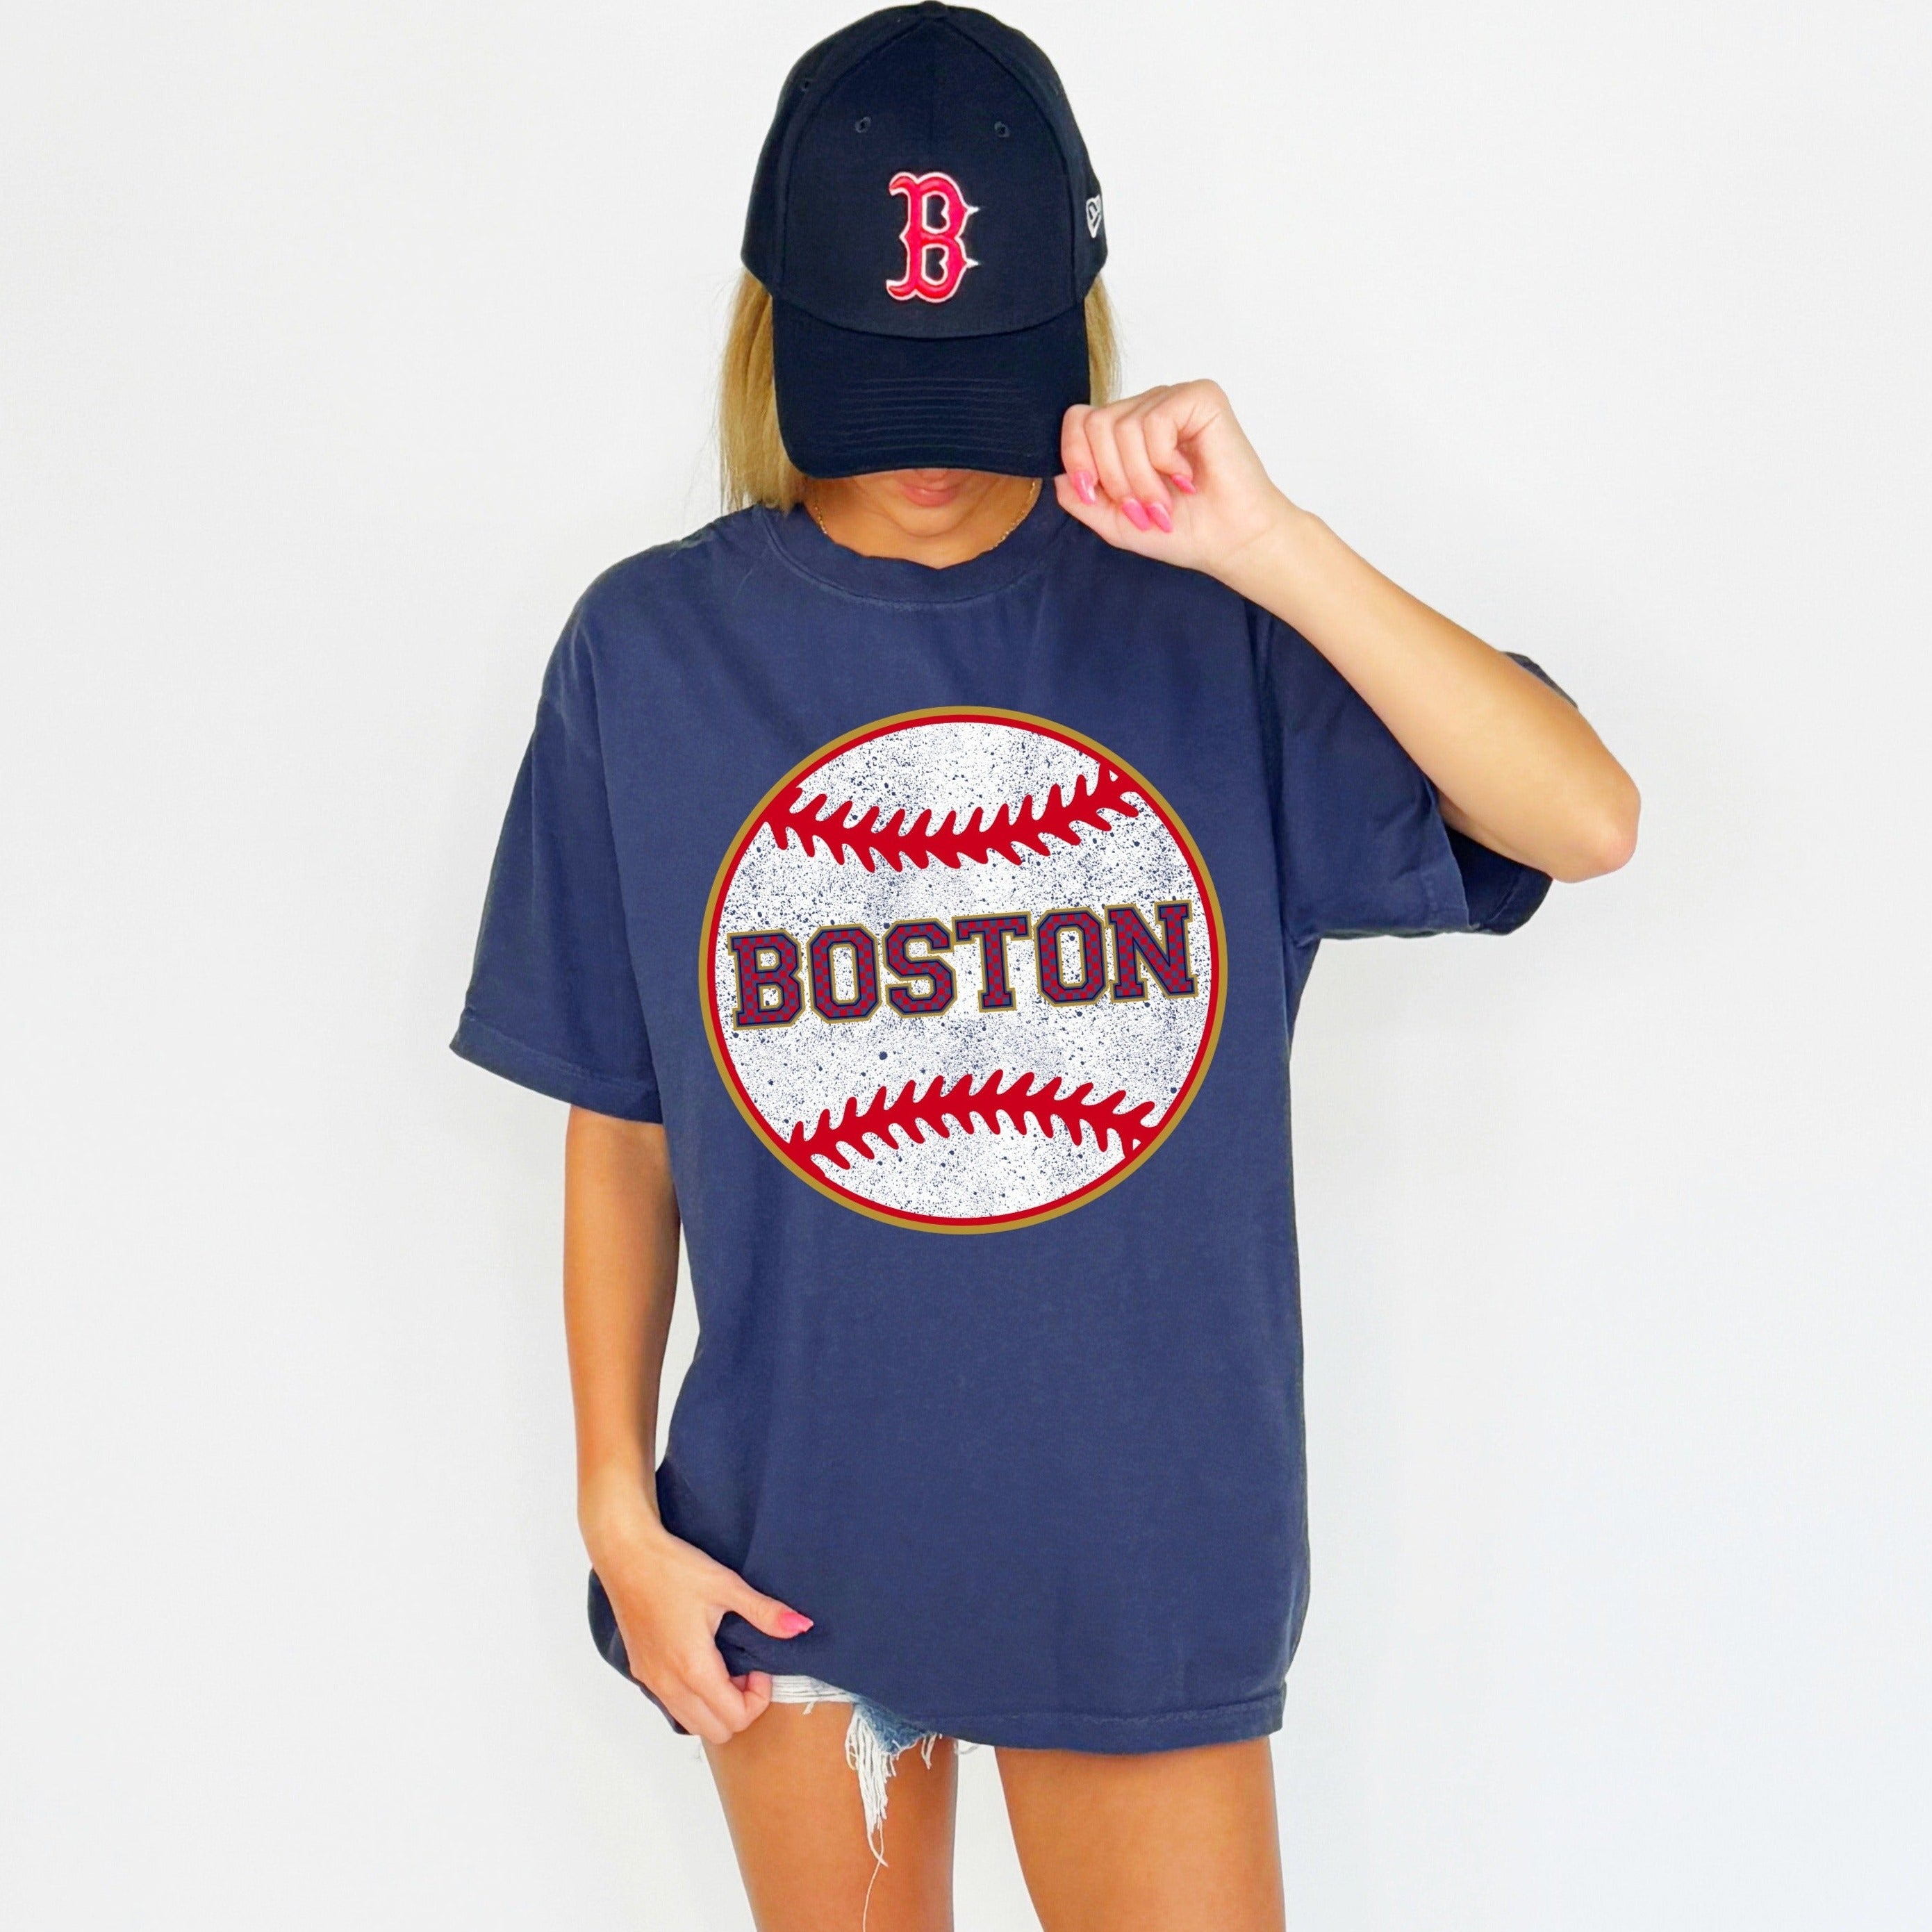 Boston Grunge Baseball Youth & Adult tee